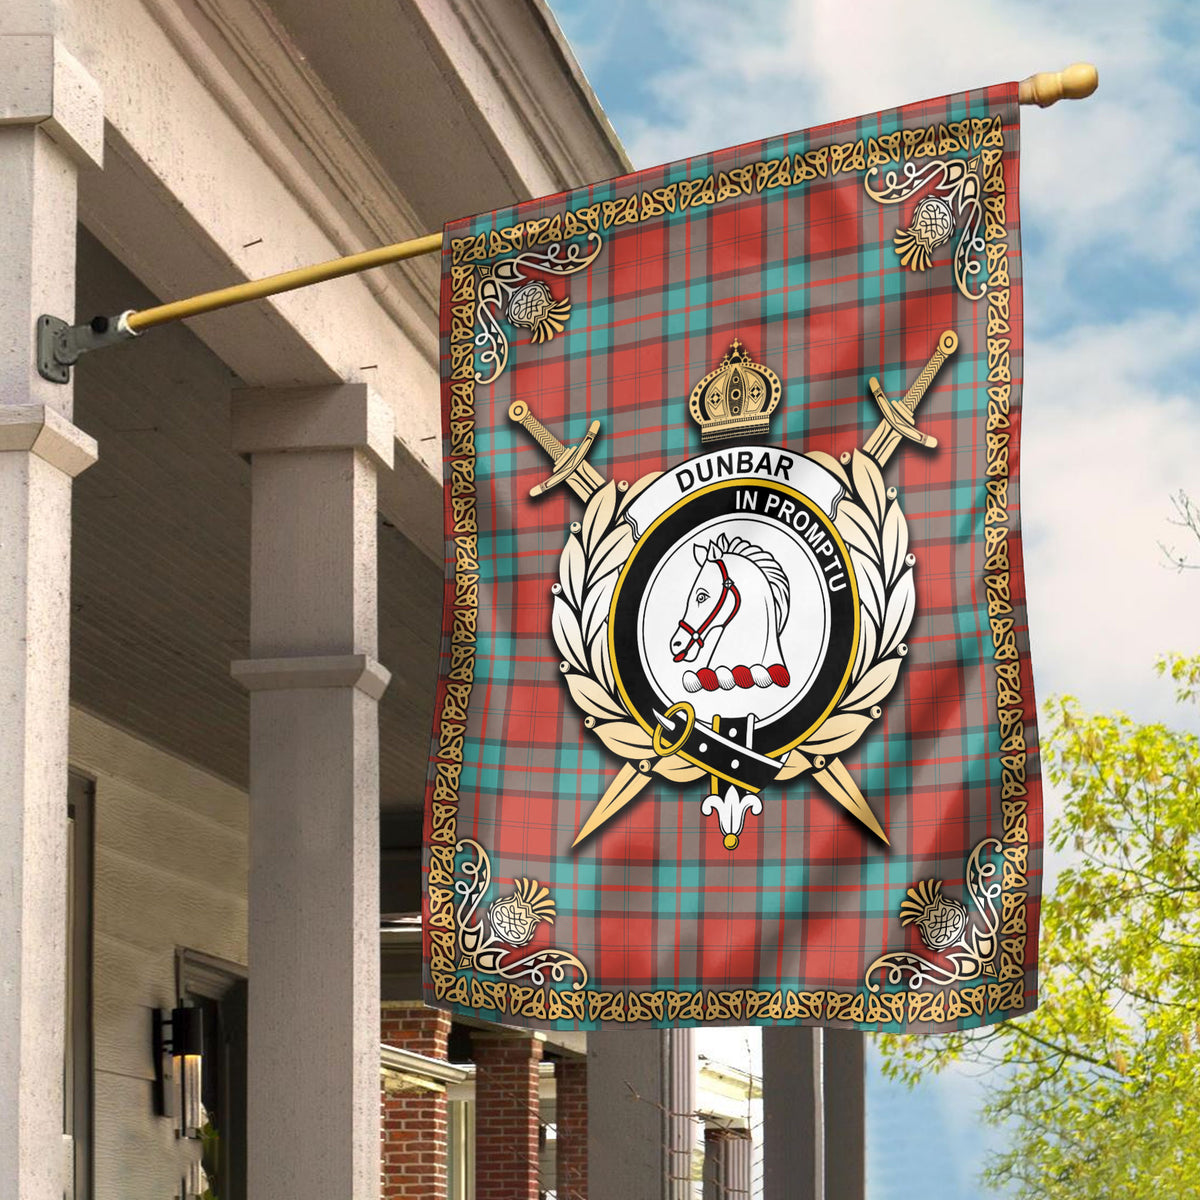 Dunbar Ancient Tartan Crest Garden Flag - Celtic Thistle Style